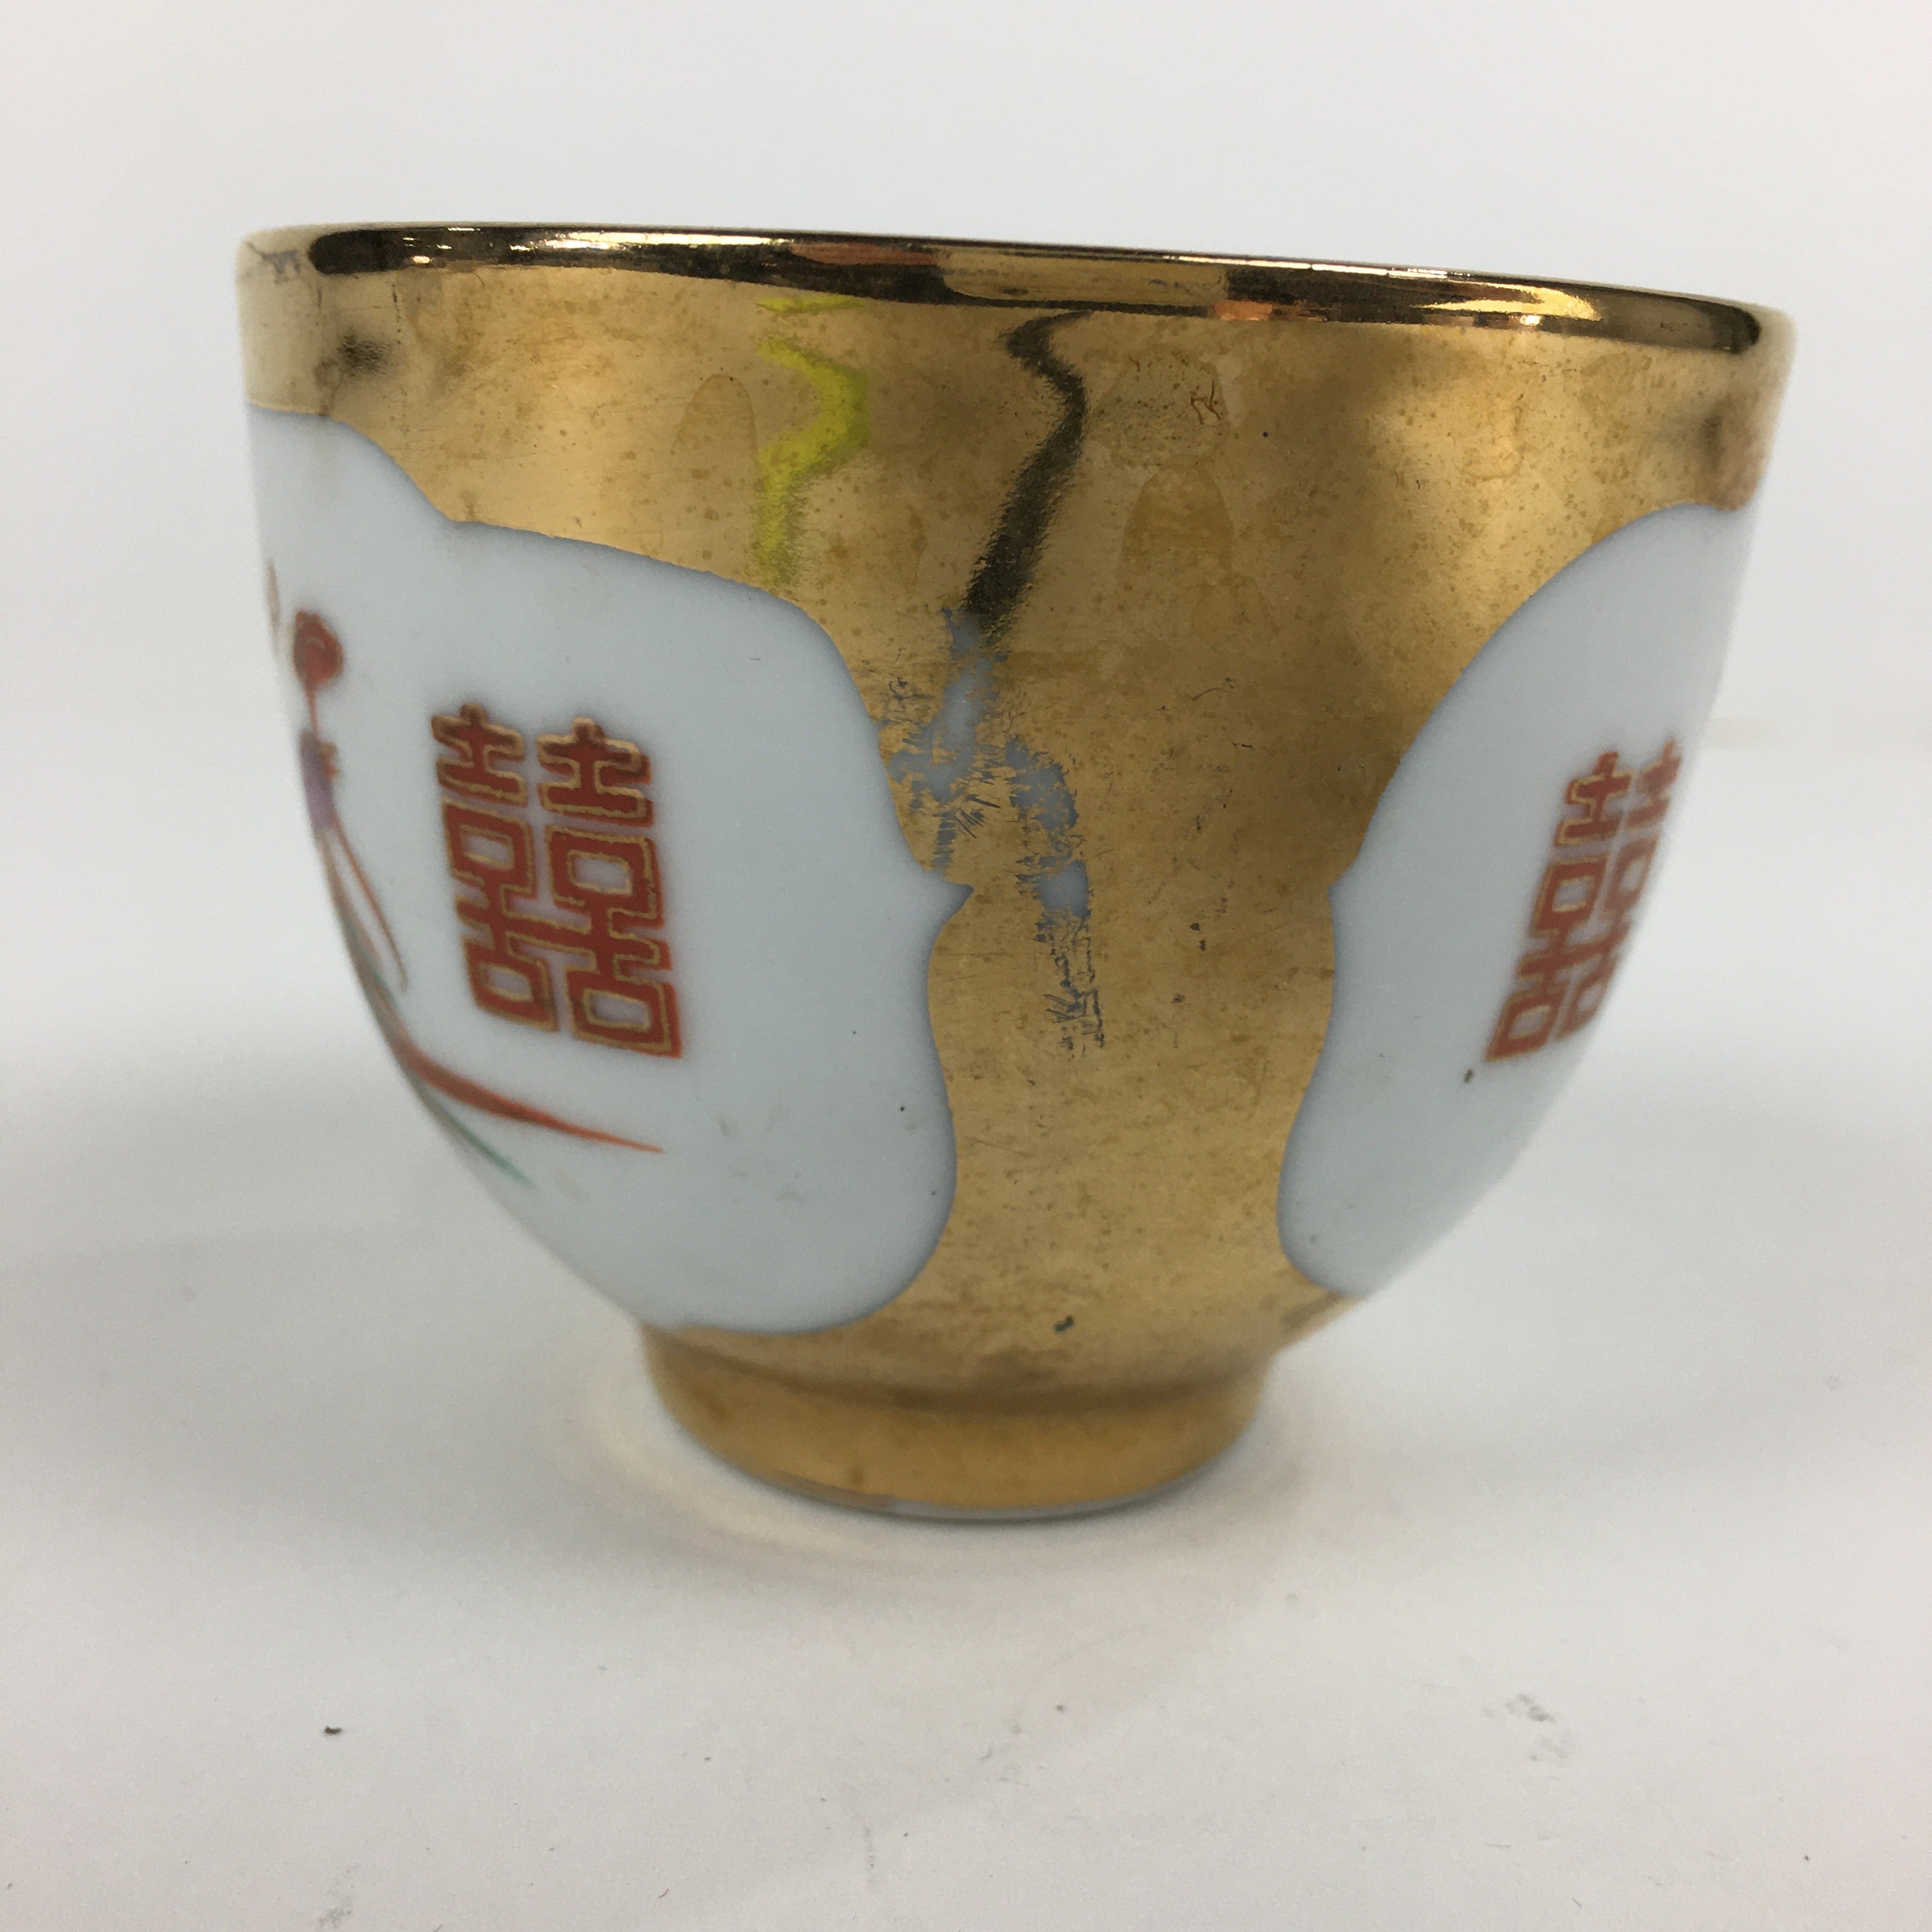 Chinese Porcelain Teacup Vtg Dragon Phoenix Bird Gold Jingdezhen City PP782